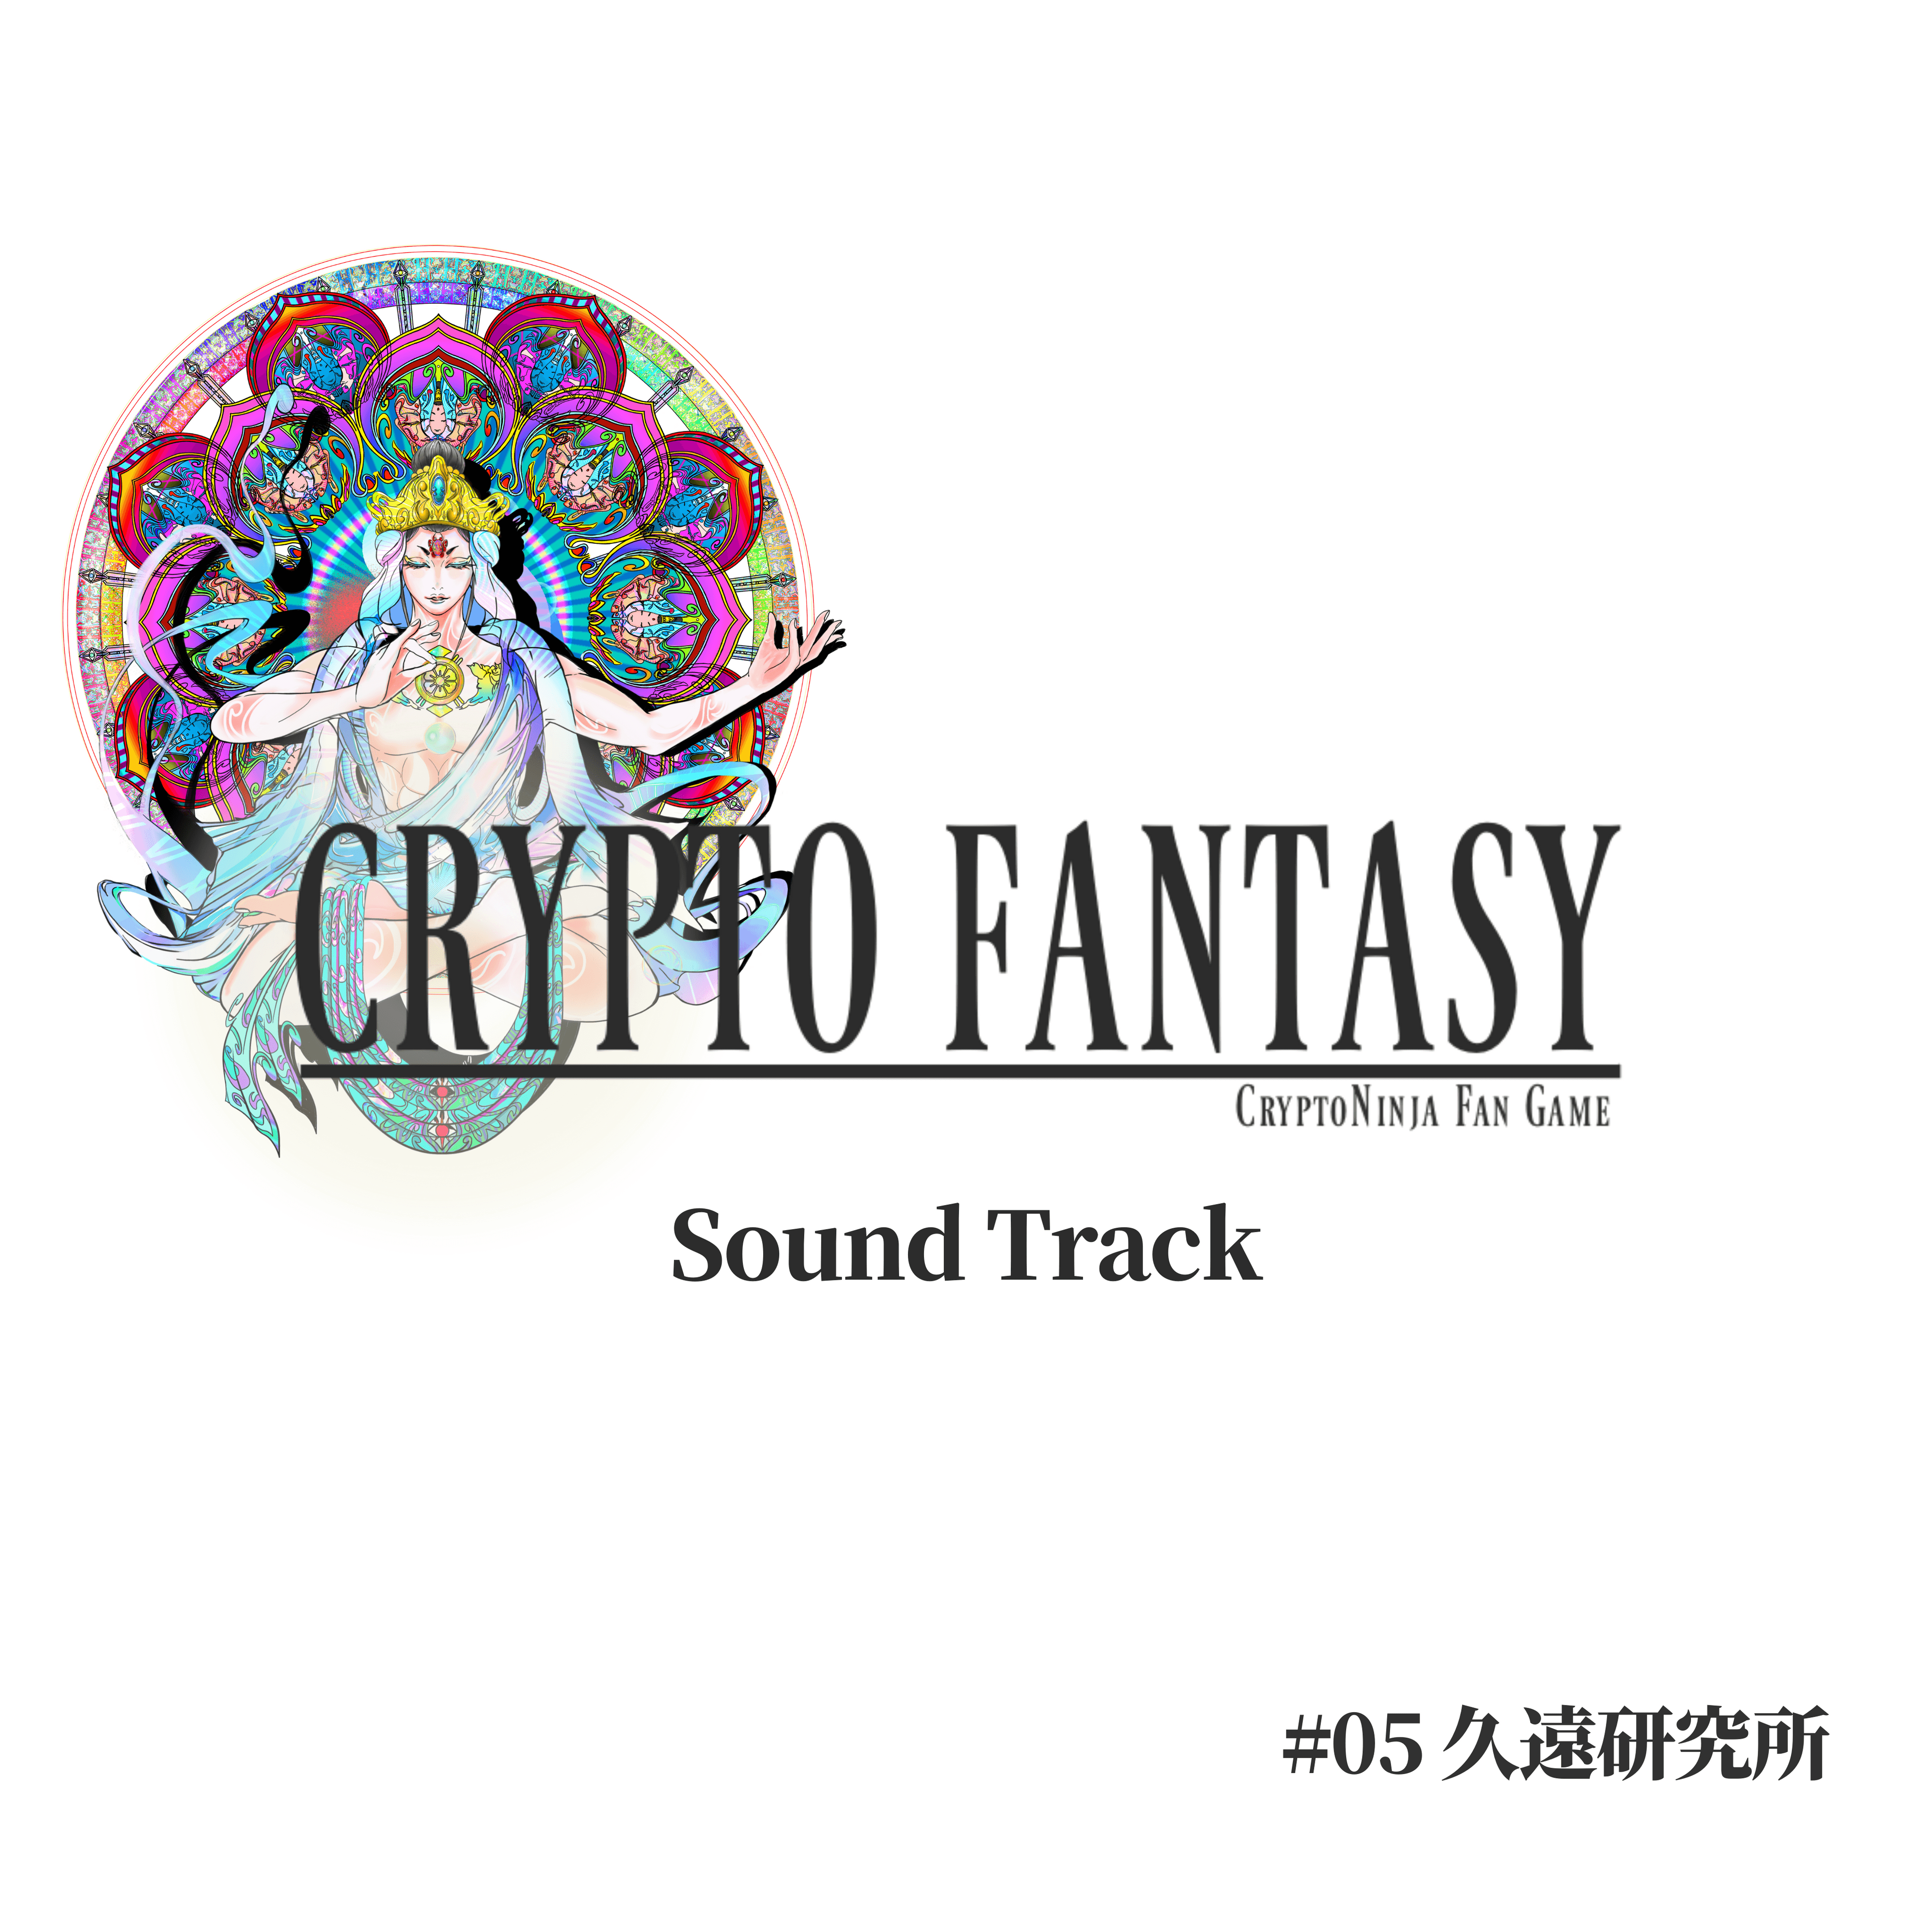 CrtptoFantasy SoundTrack - #05 久遠研究所